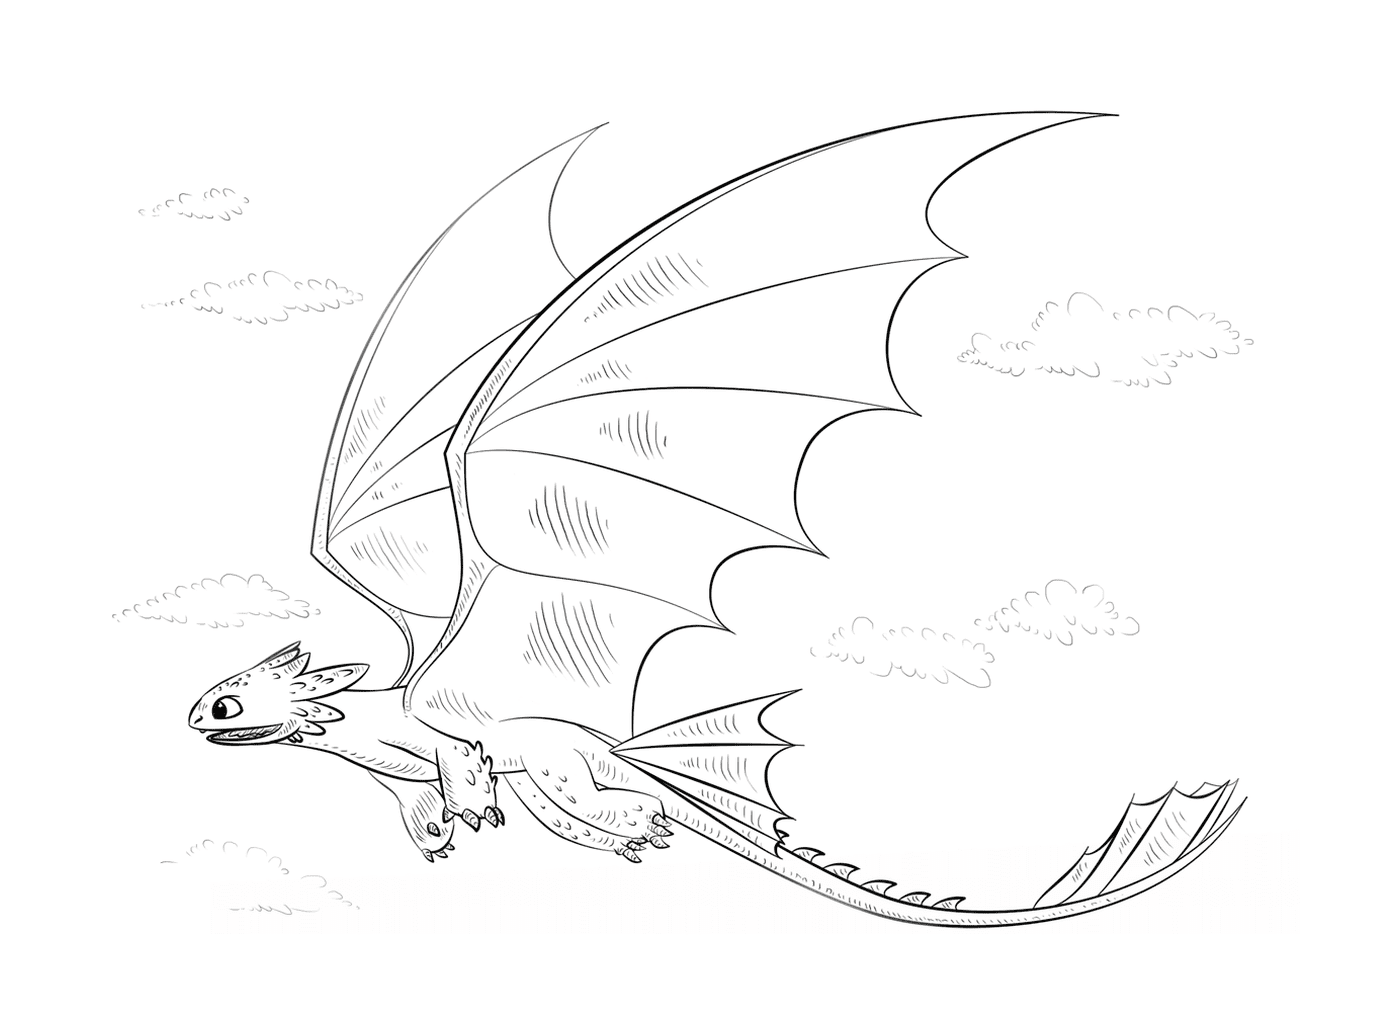   Dragon rare, vol majestueux 